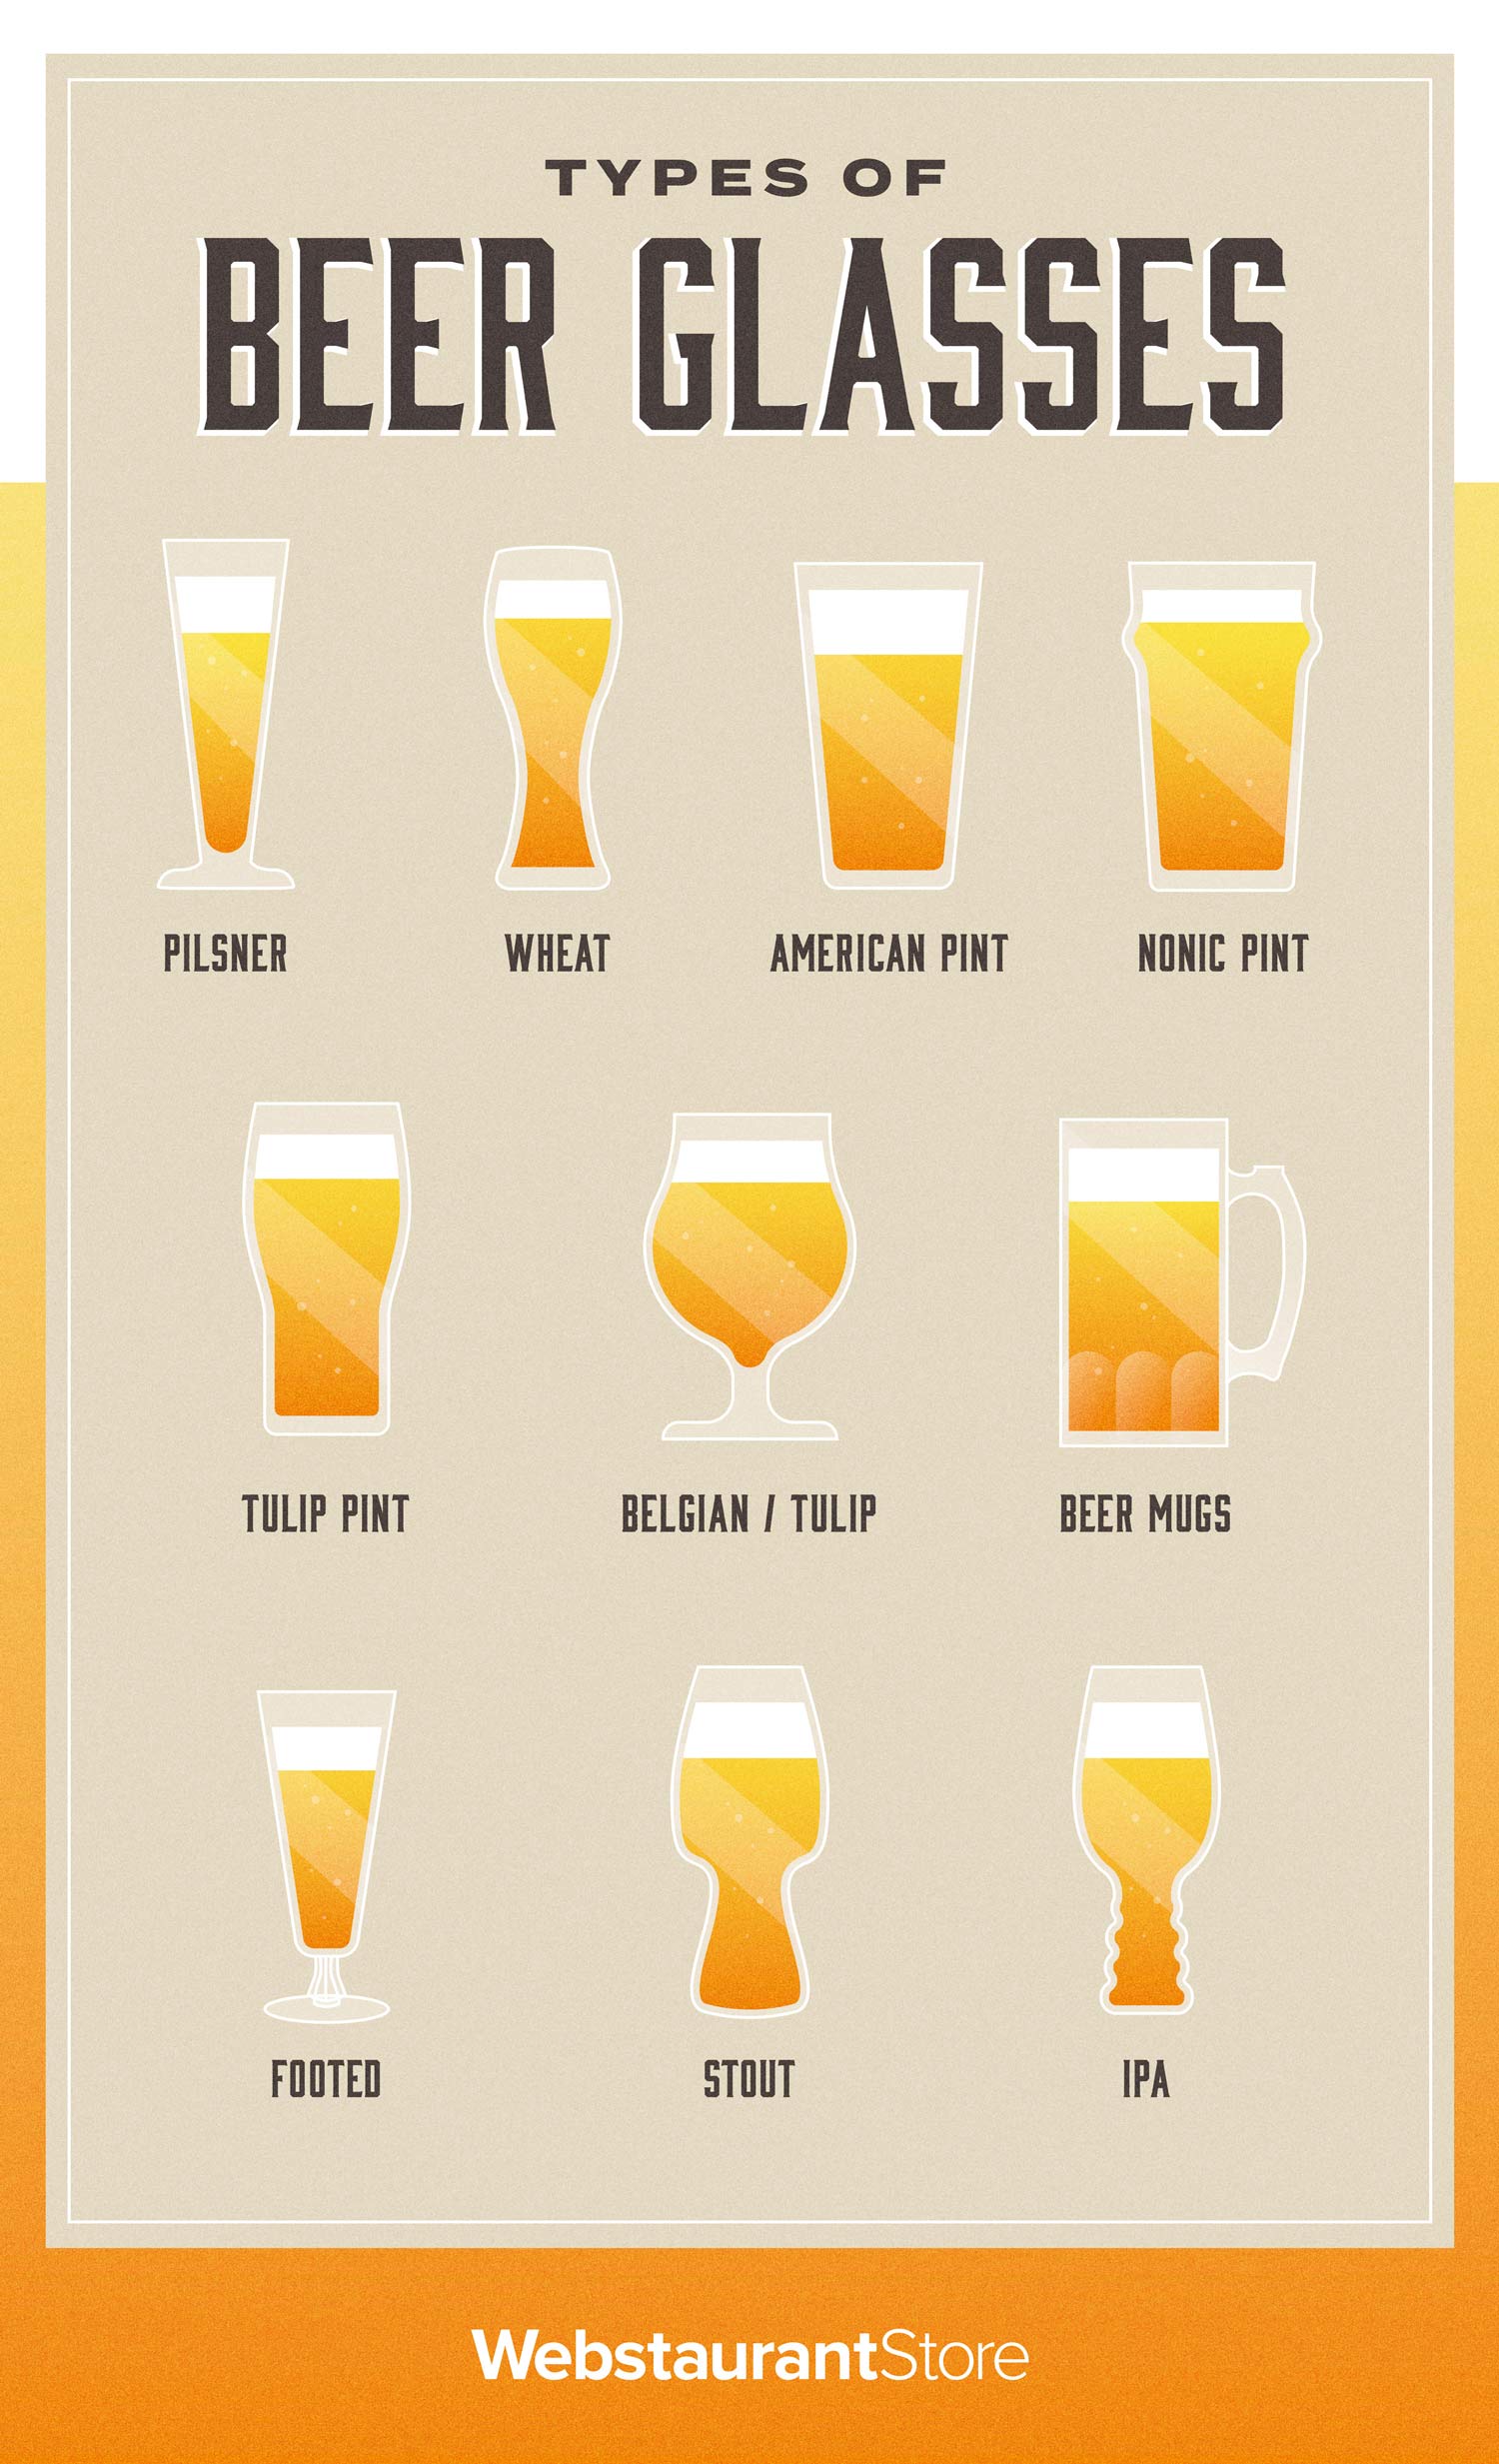 https://cdnimg.webstaurantstore.com/uploads/seo_category/2021/6/beer-glasses-infographic.jpg